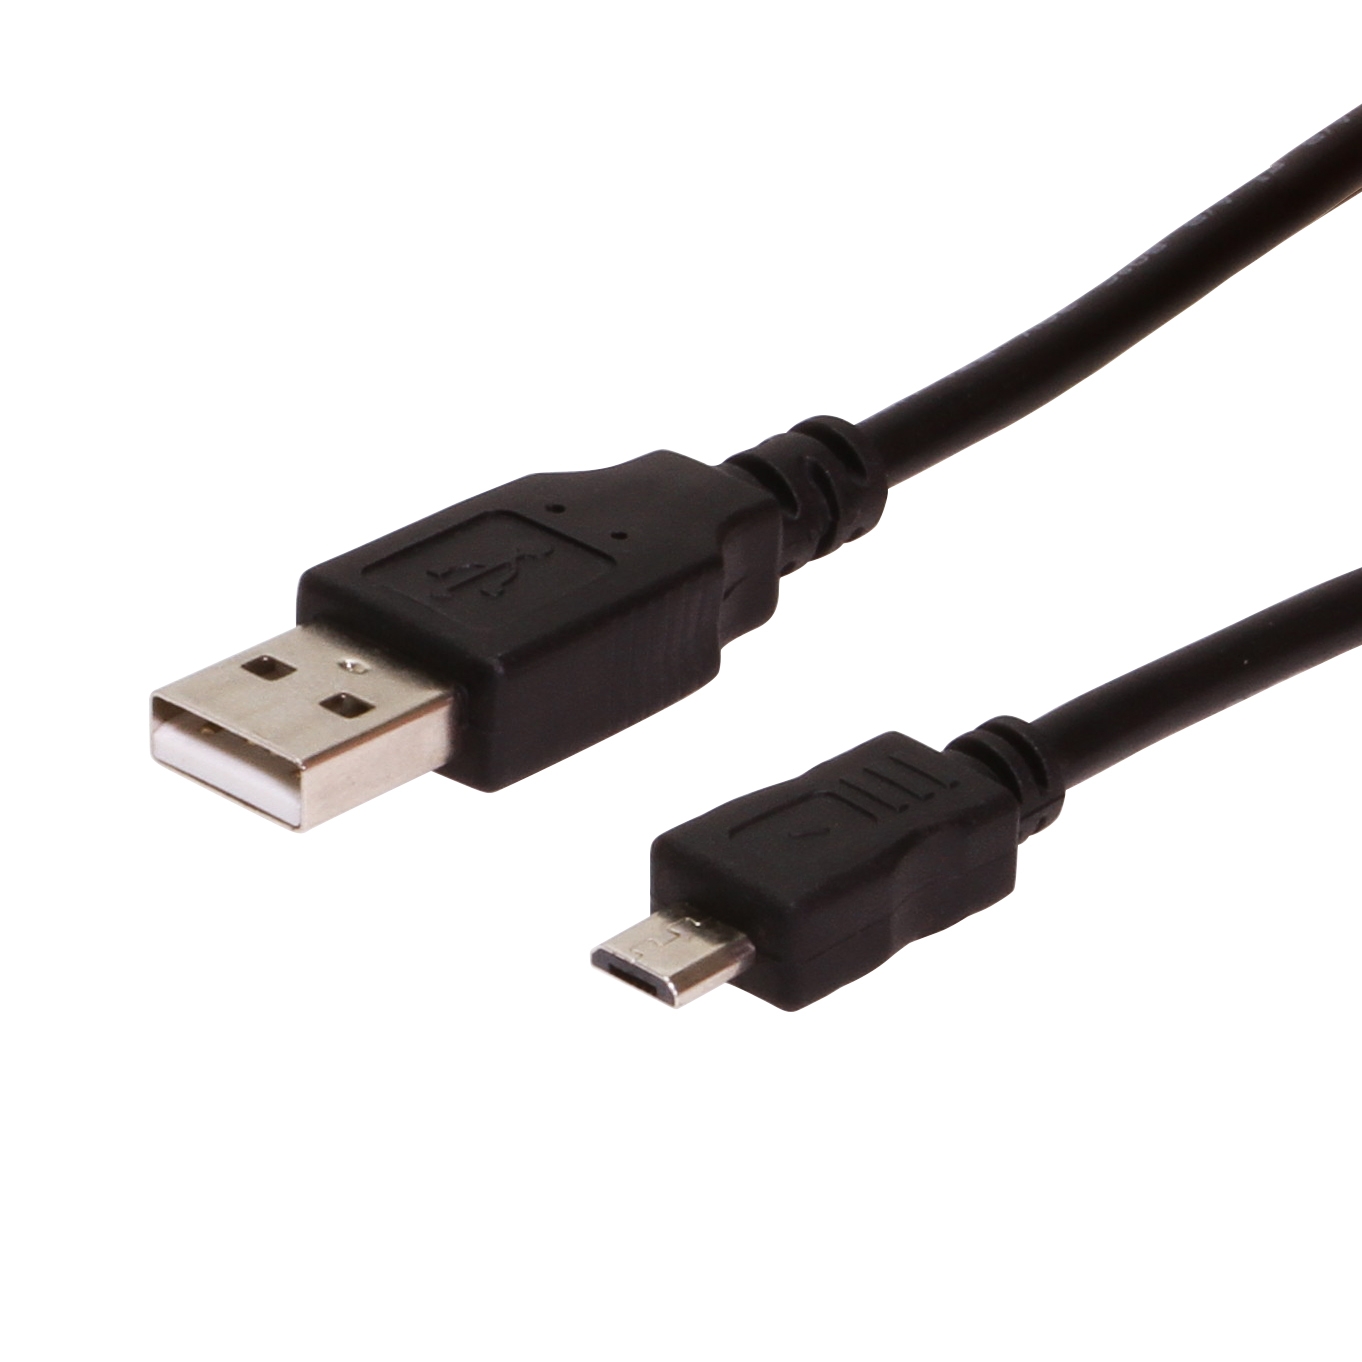 trug Hurtig Hav 8 inch USB 2.0 A male to Micro-B Male Cable